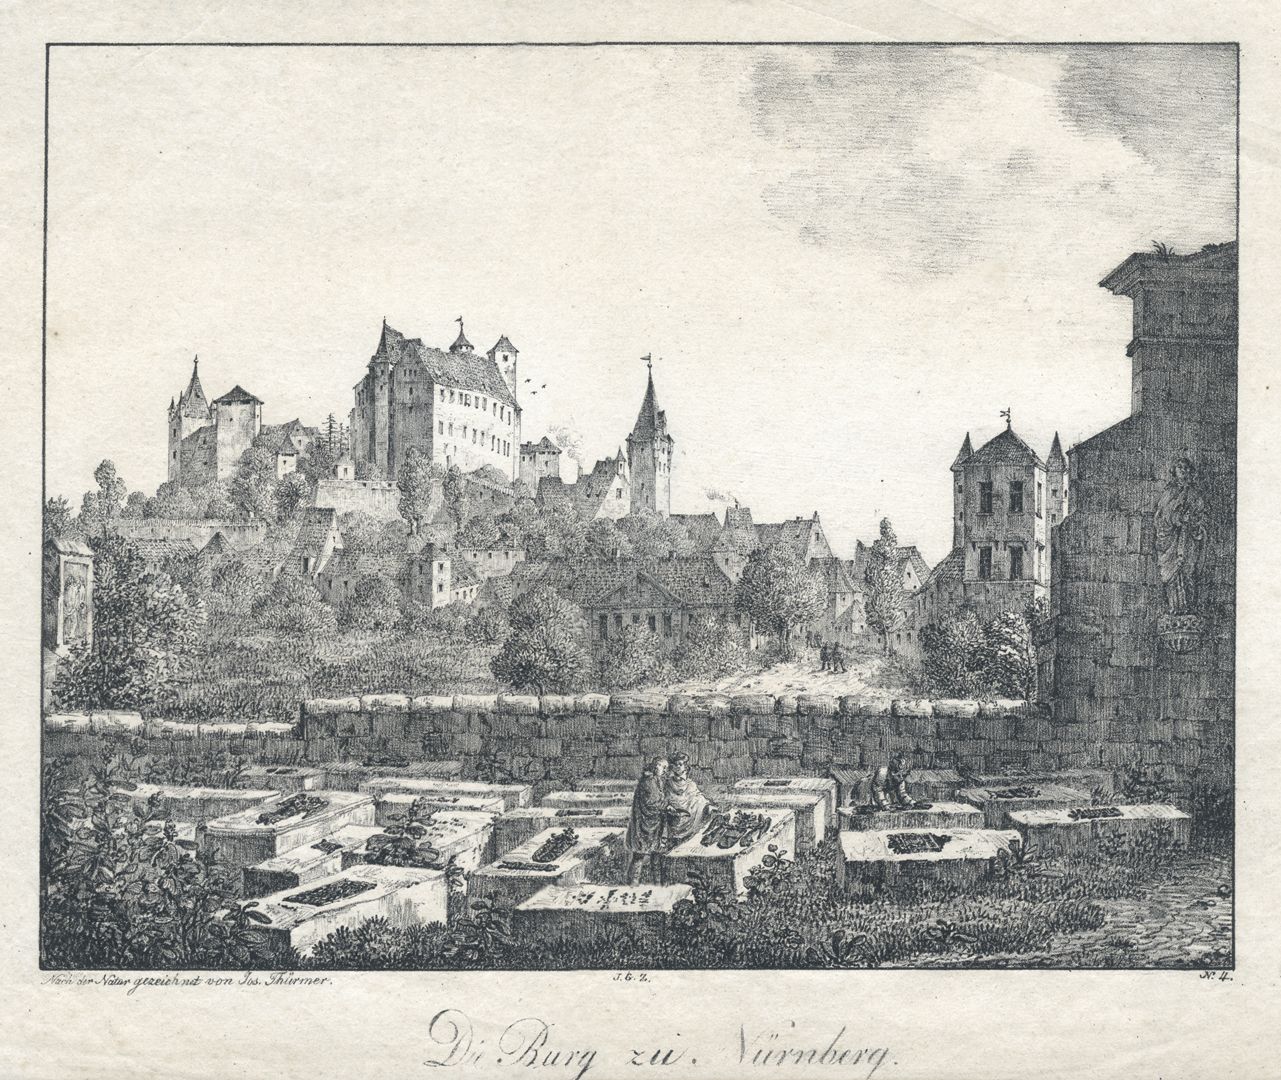 The Nuremberg castle 